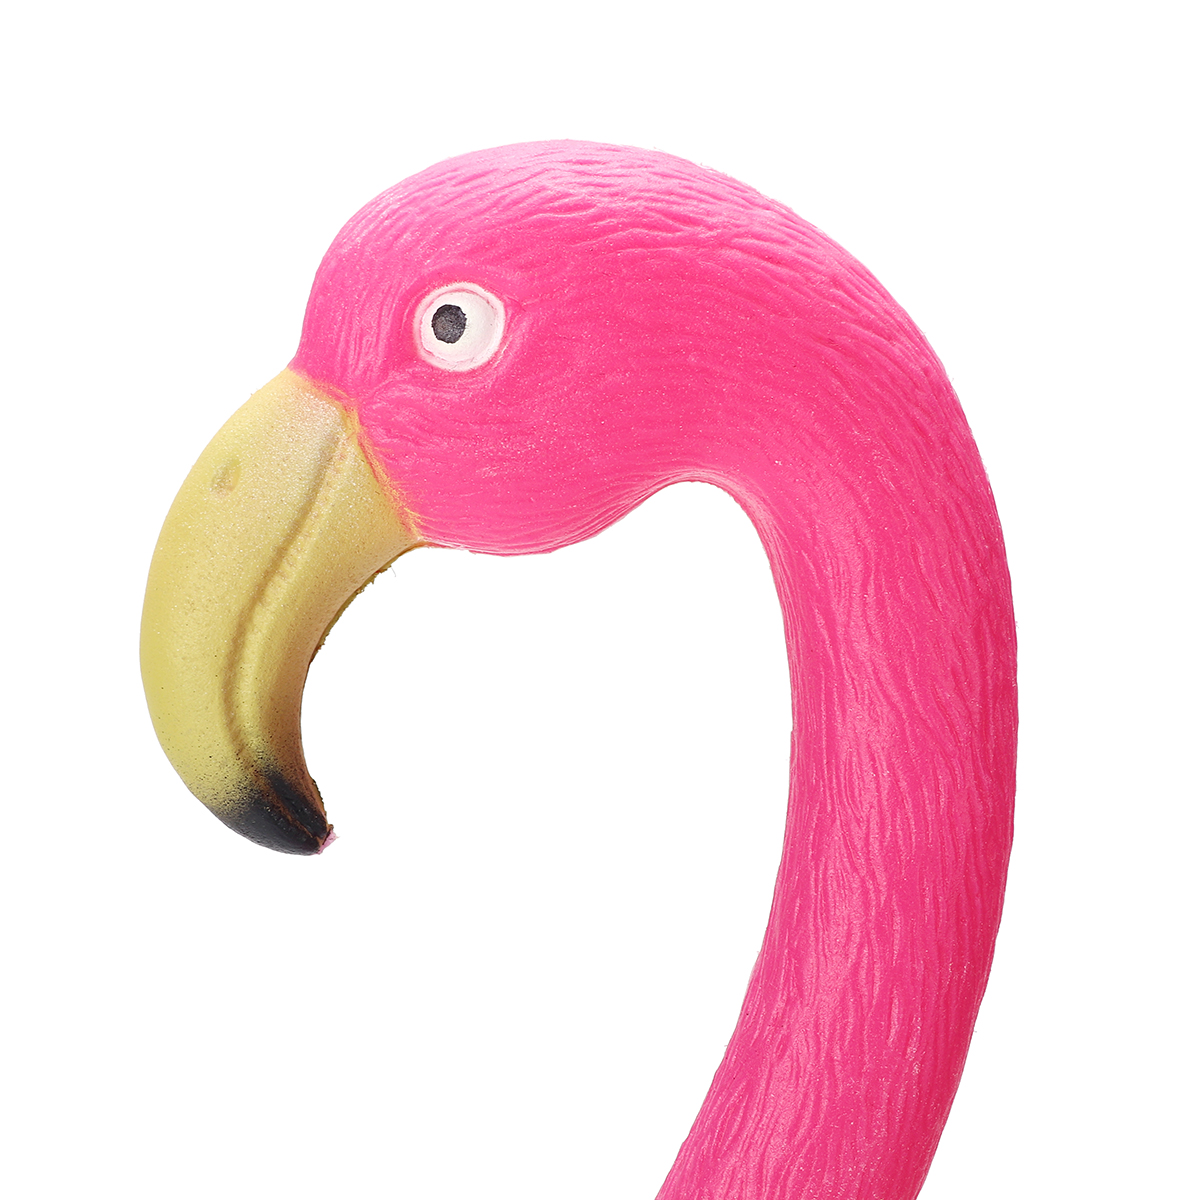 Pink Flamingo Plastic Yard Garden Lawn Art Ornaments Retro